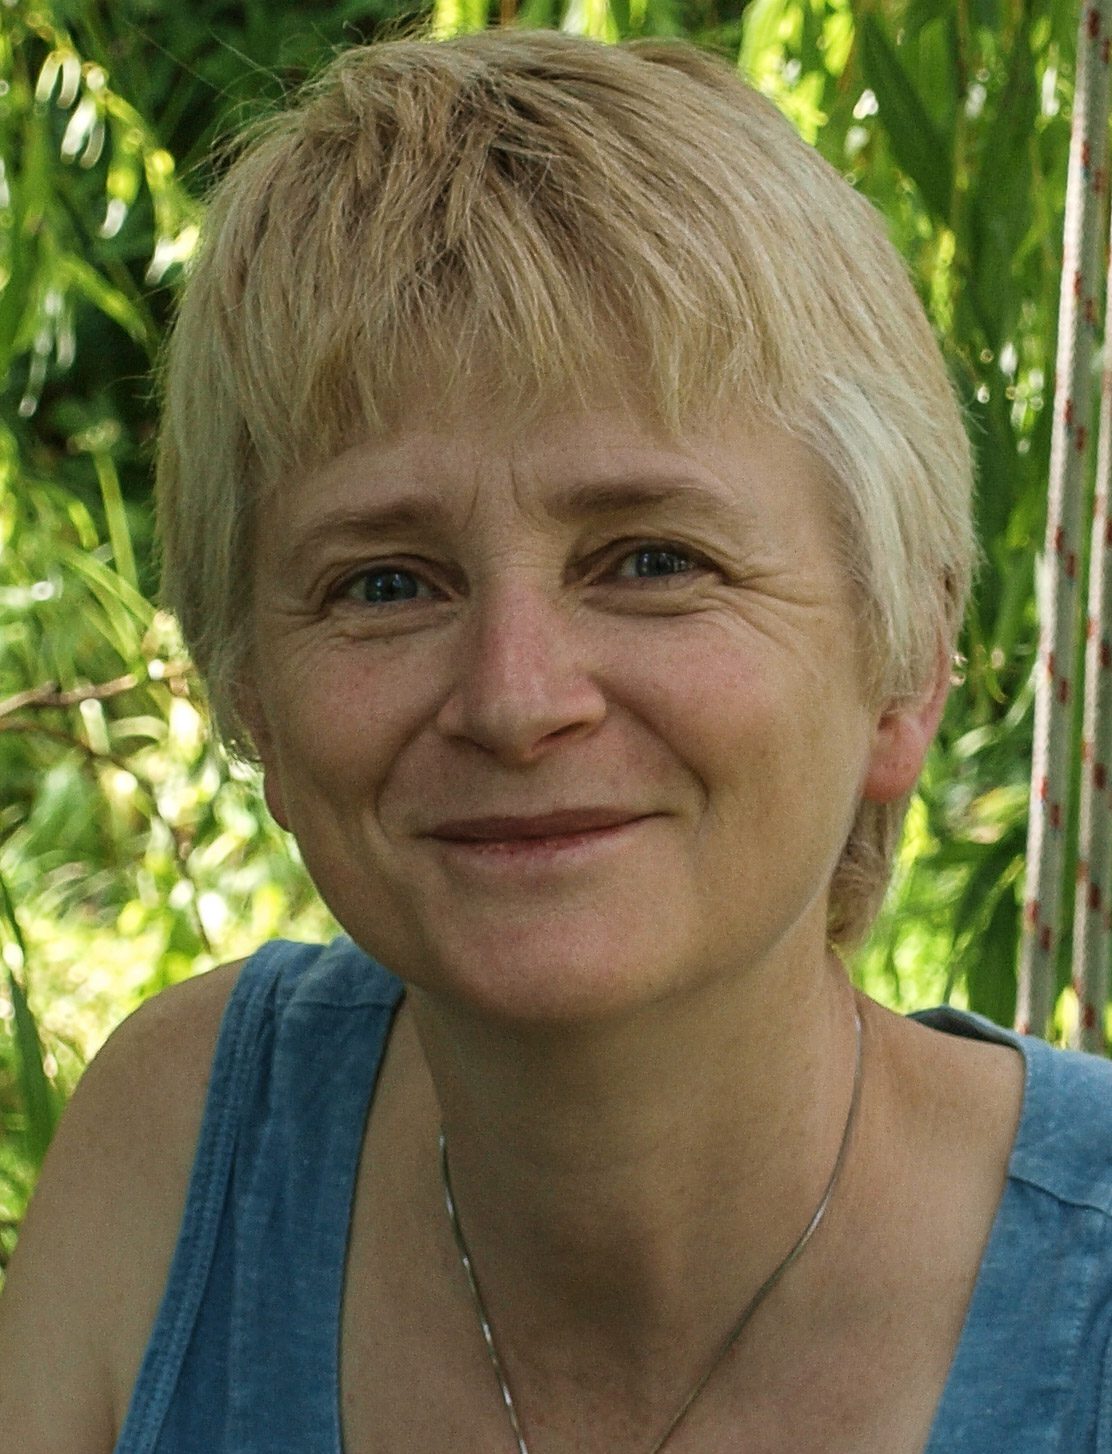 Professor Cathie Sudlow